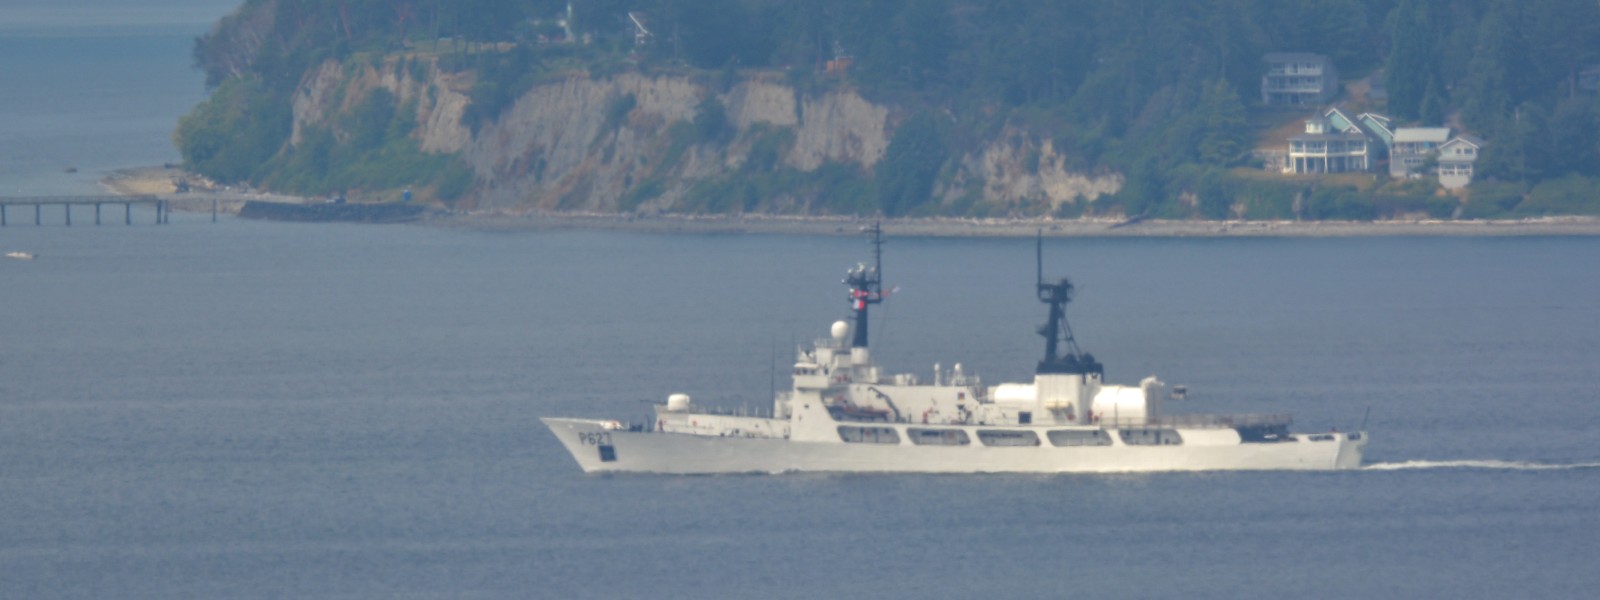 Navy's latest warship reaches Colombo